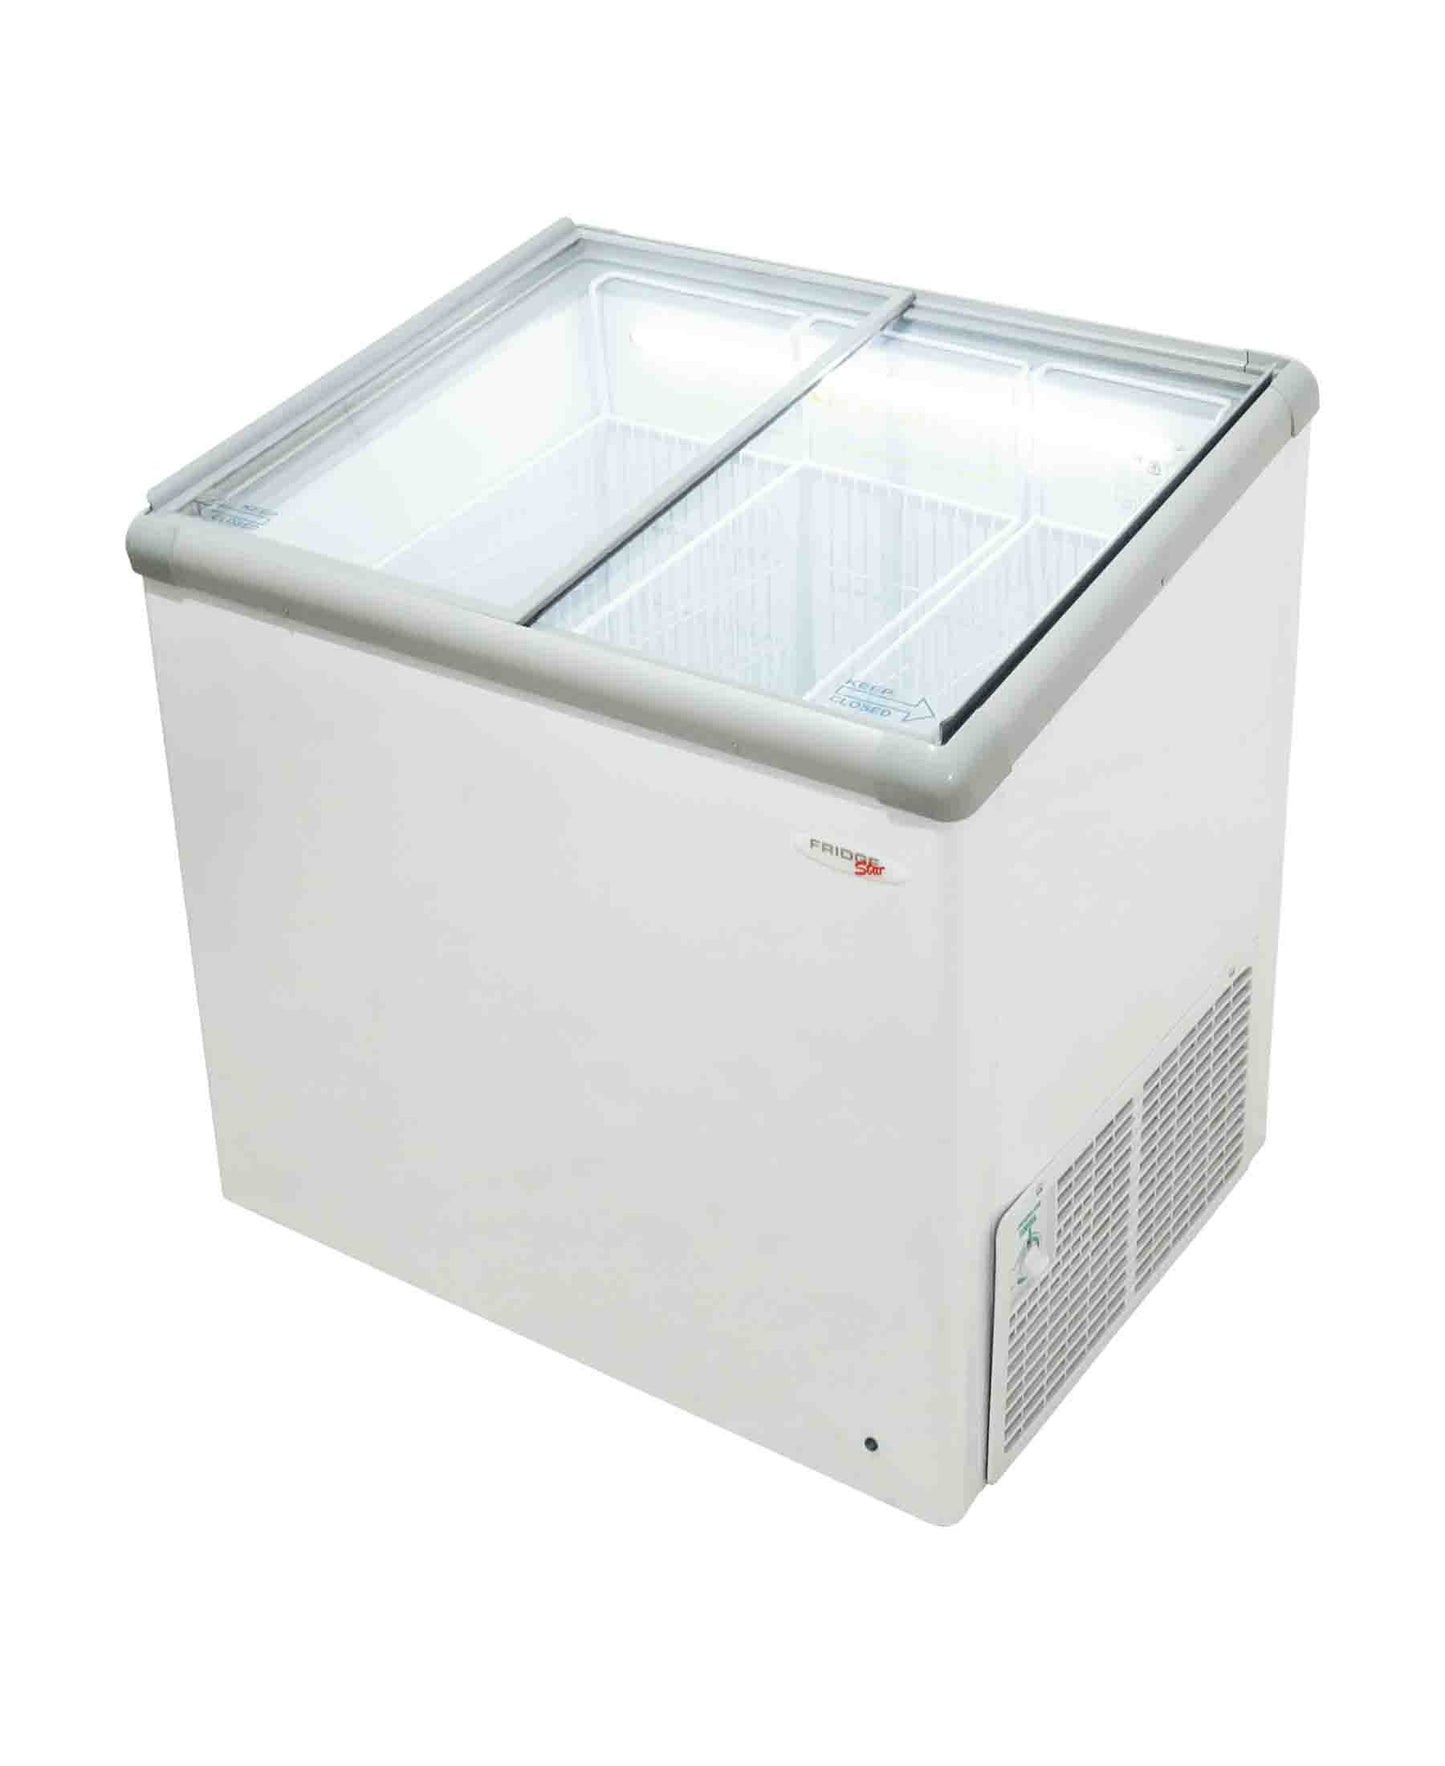 Fridge Star Ice Cream Freezer 200LT CF310VI - White